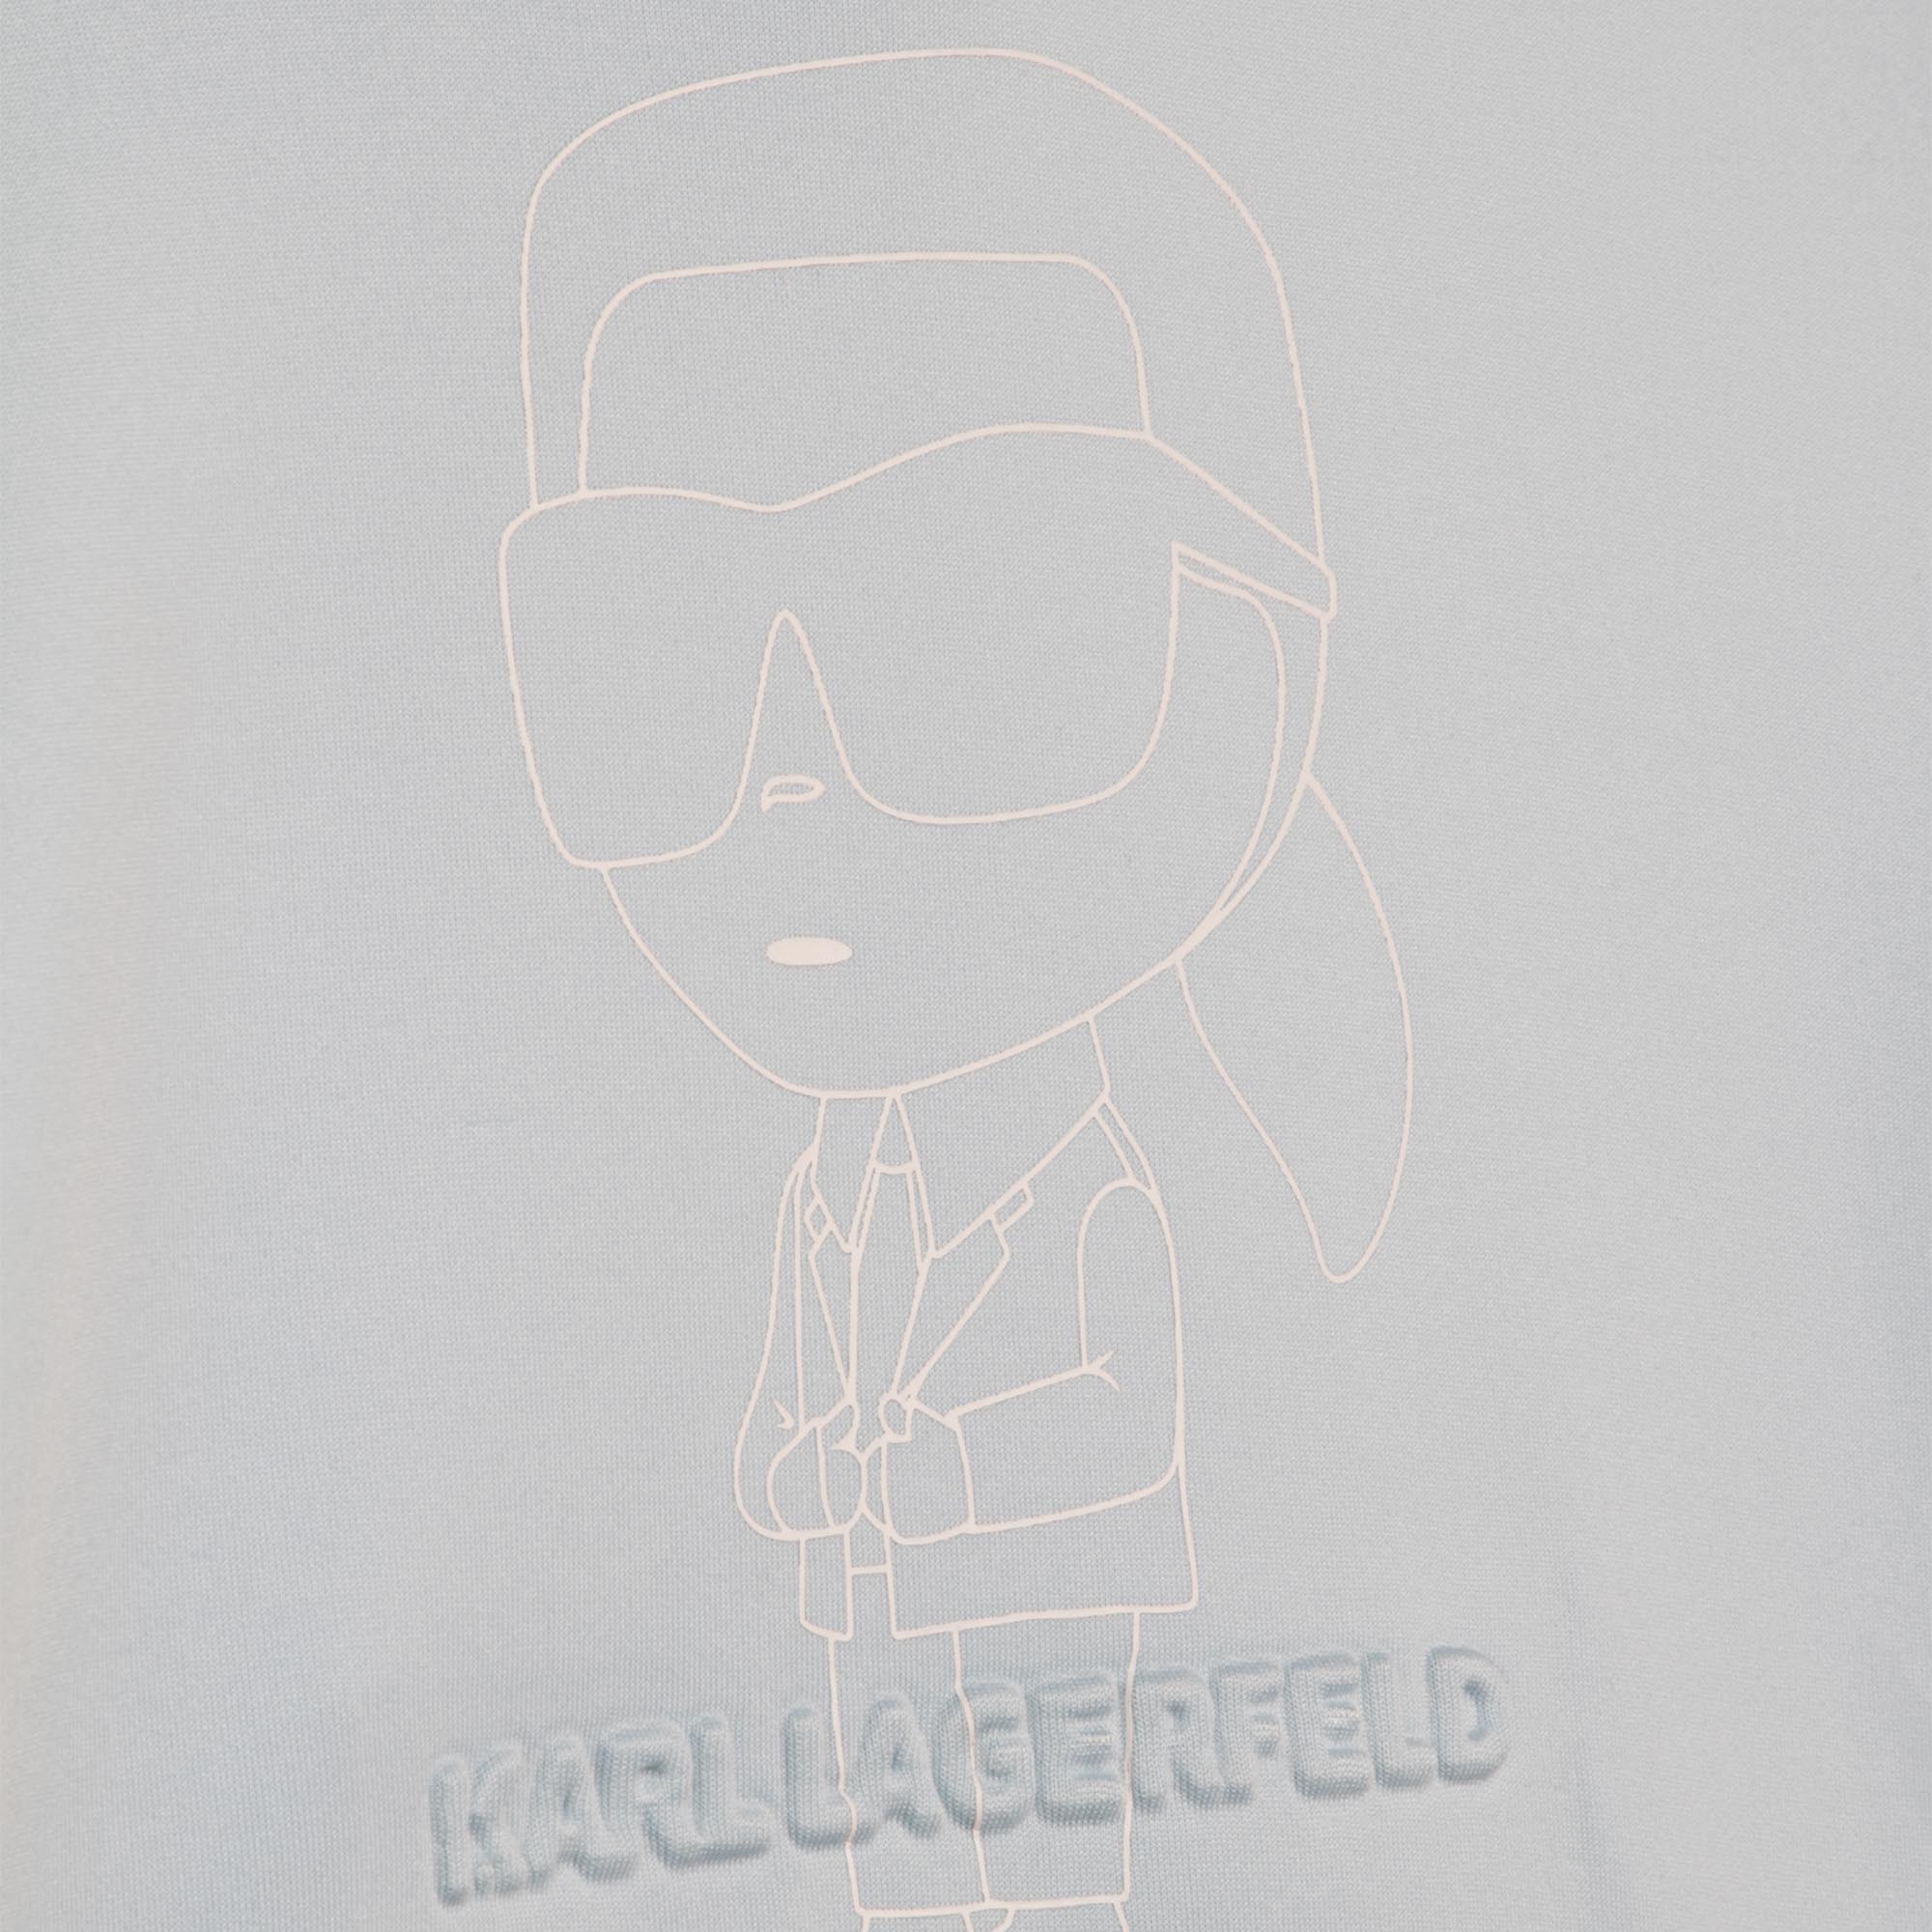 Novelty collar sweatshirt KARL LAGERFELD KIDS for BOY